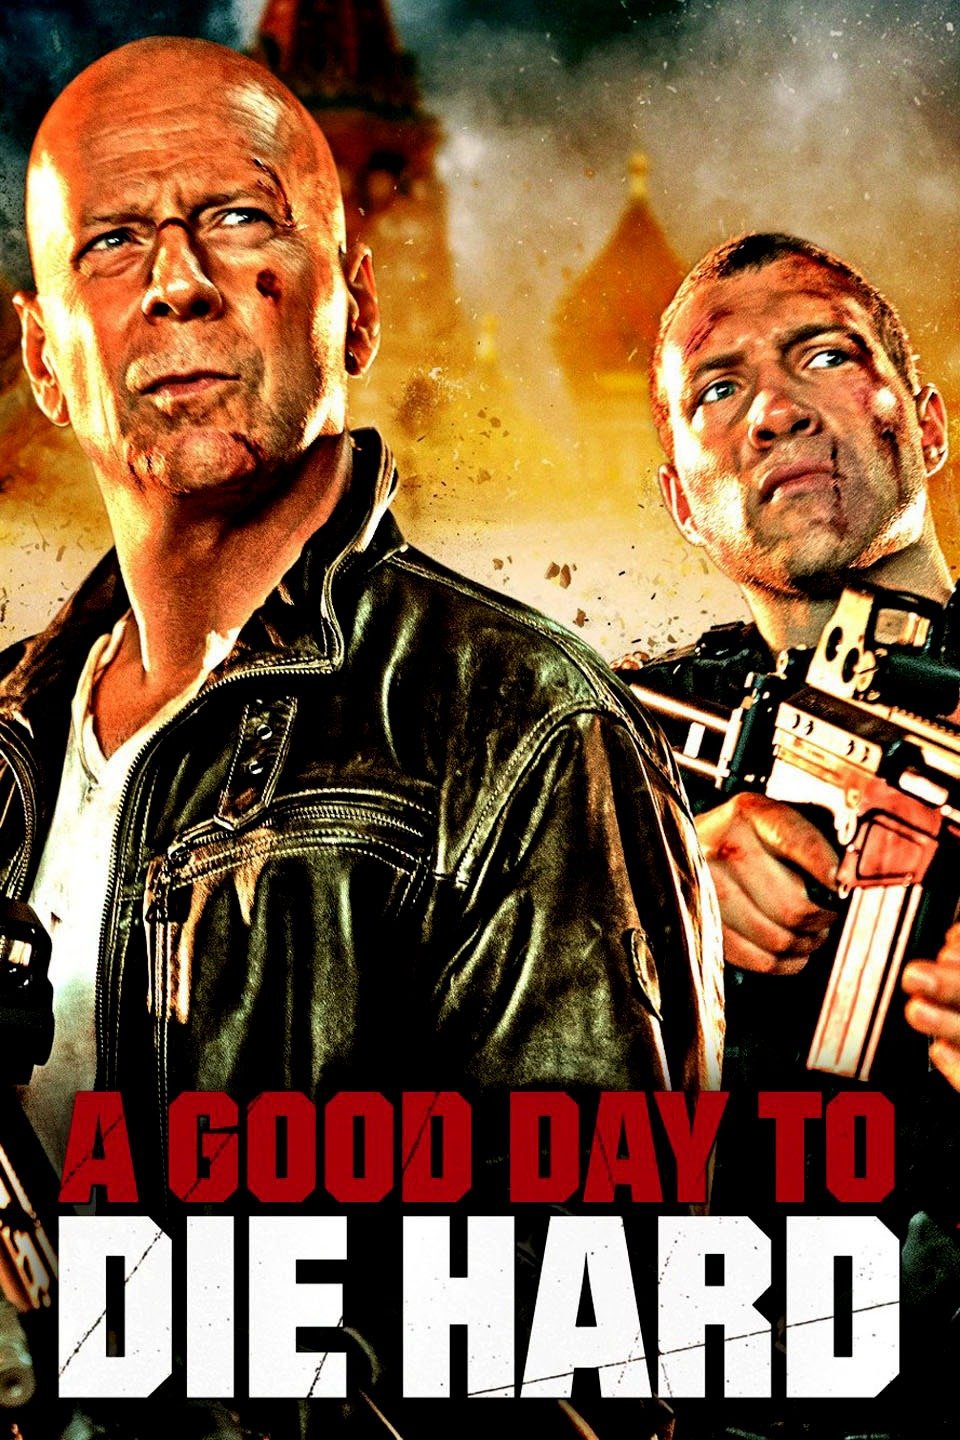 [MINI Super-HQ] A Good Day to Die Hard (2013) ดาย ฮาร์ด : วันดีมหาวินาศ คนอึดตายยาก ภาค 5 [1080p] [พากย์ไทย 5.1 + เสียงอังกฤษ DTS] [บรรยายไทย + อังกฤษ] [เสียงไทย + ซับไทย] [OPENLOAD]